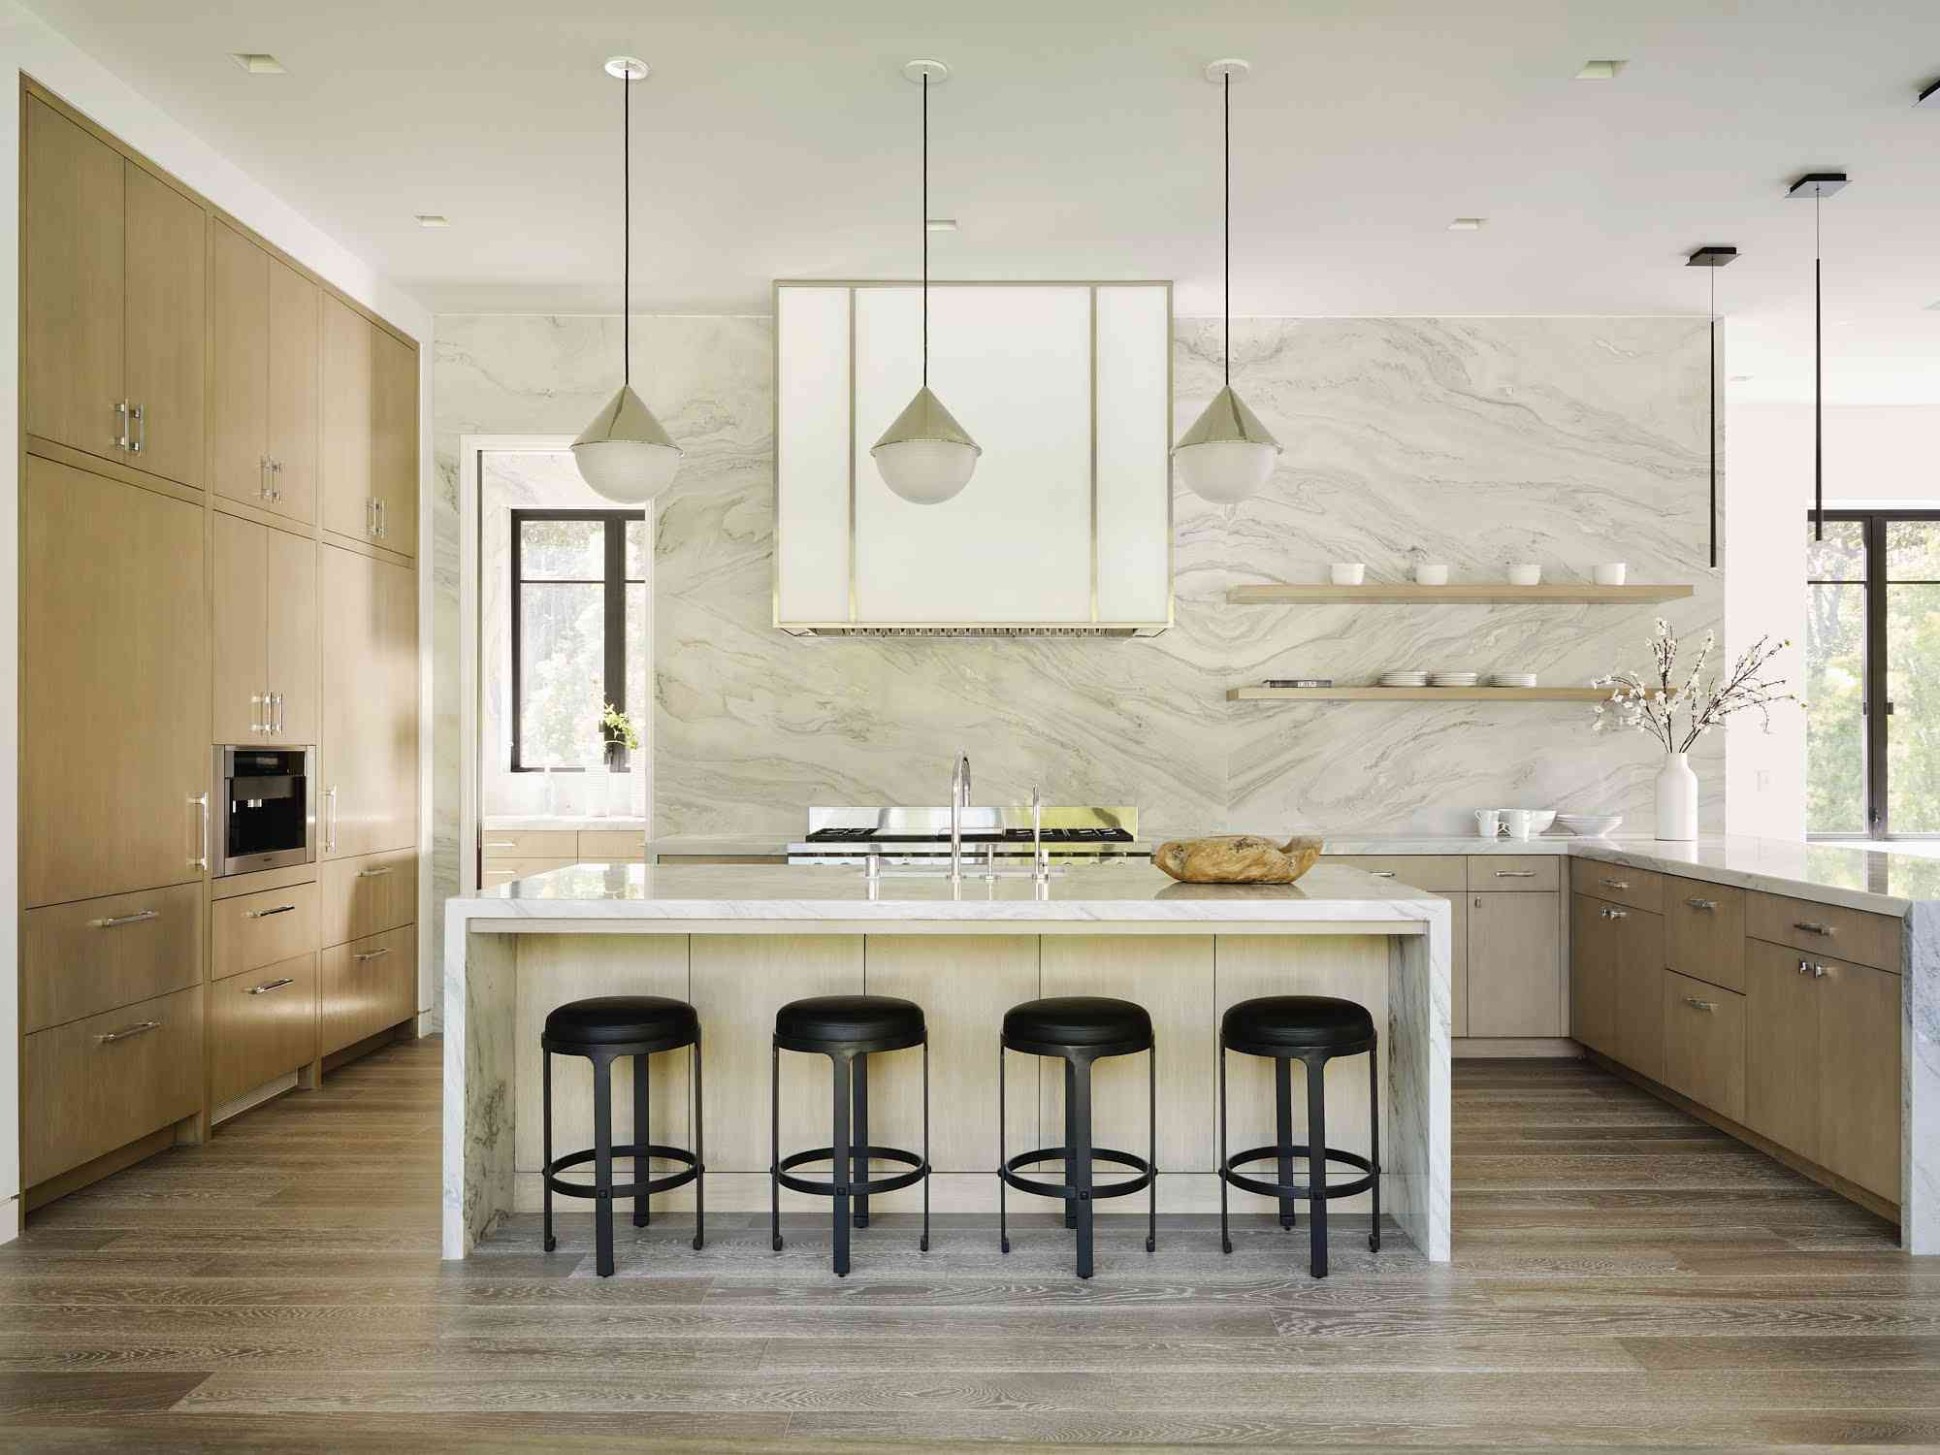 4 Polished Modern Kitchen Design Ideas to Consider - kitchen design modern ideas